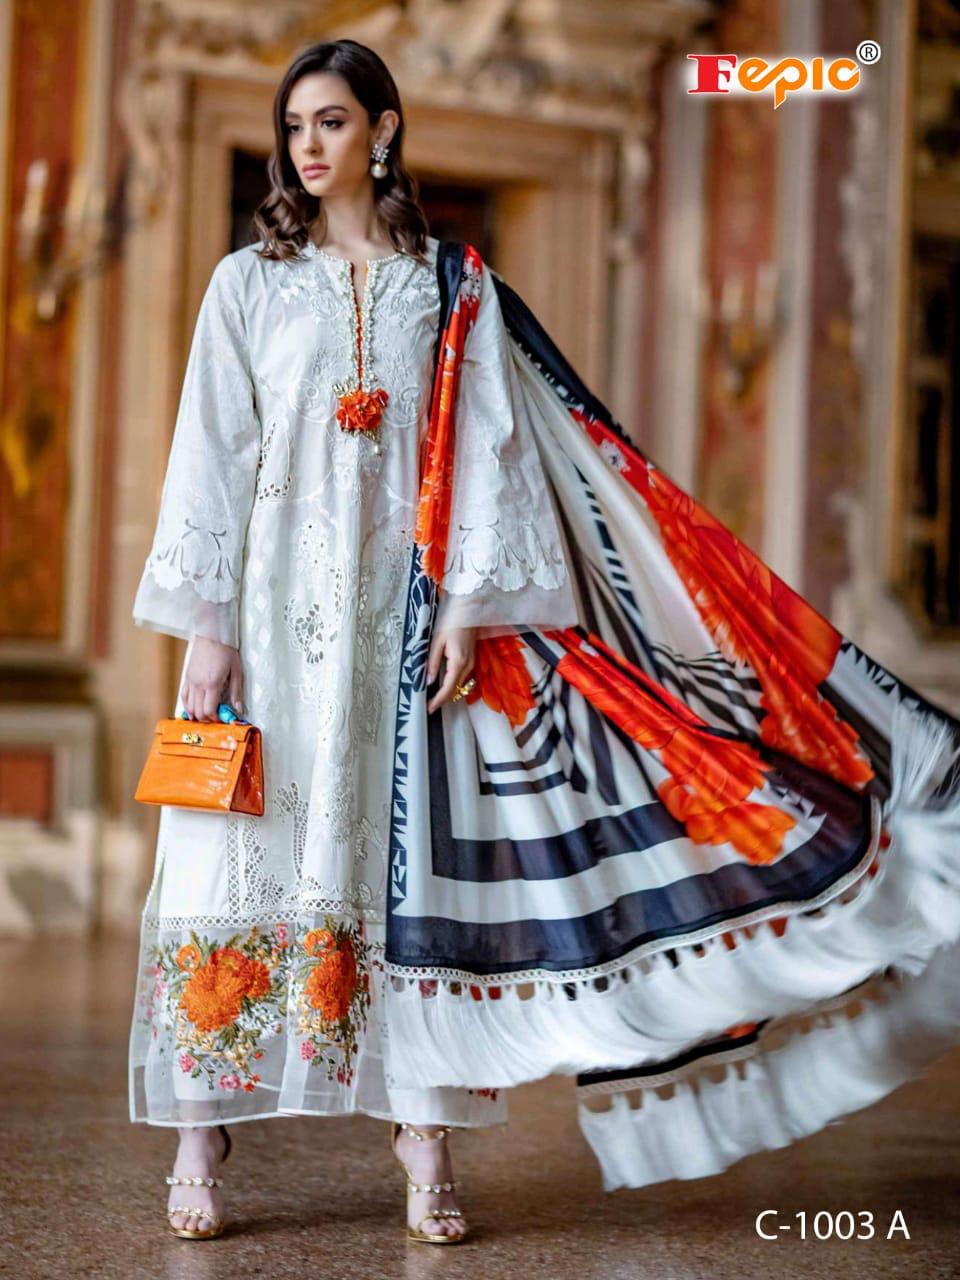 Fepic rosemeen beautiful Pakistani concept Salwar suit